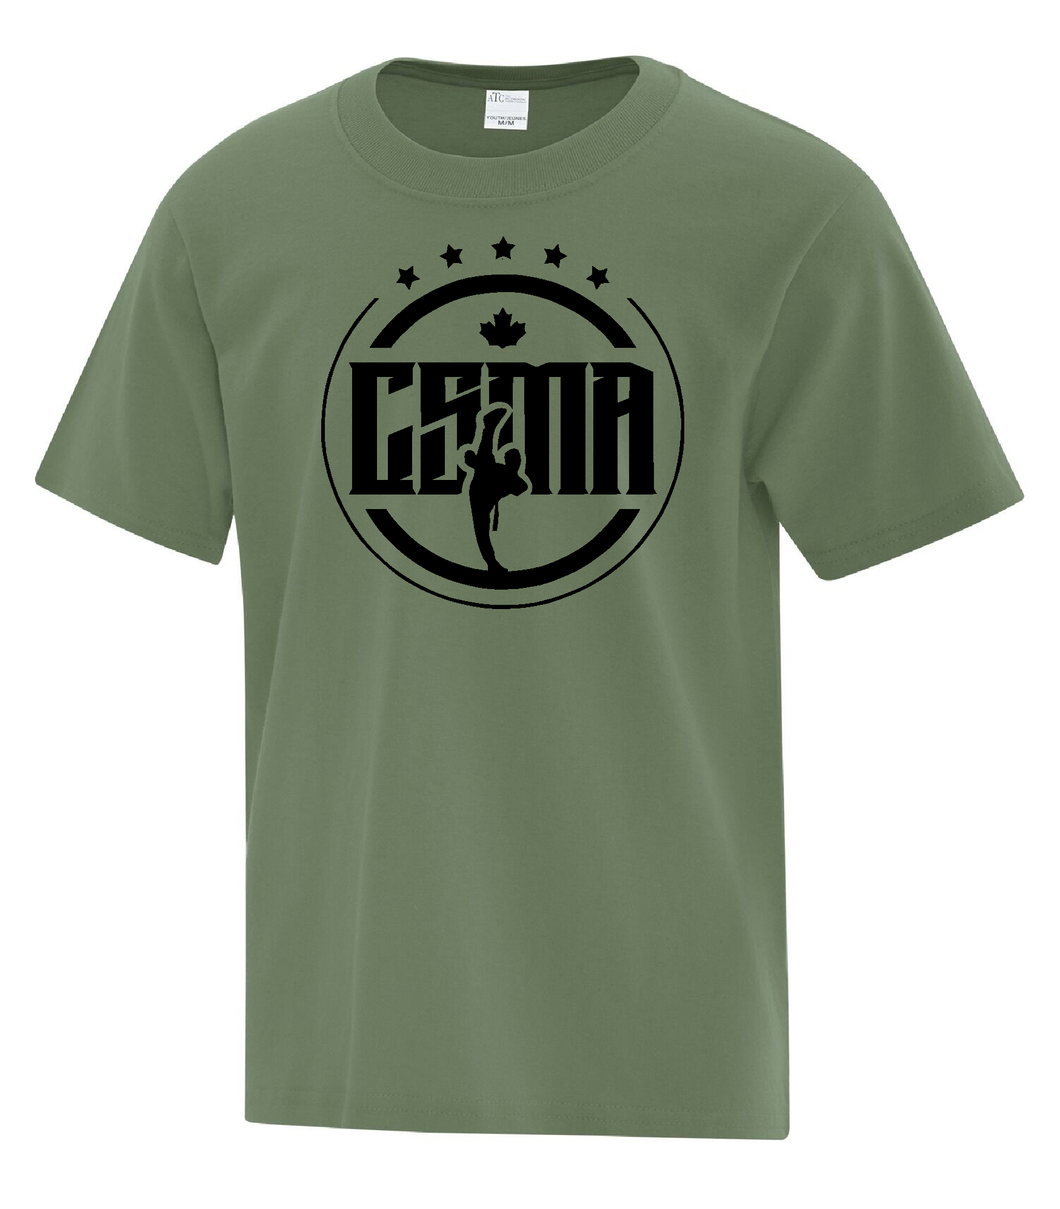 Youth Army Green T-Shirt - CSMA logo   *LIMITED EDITION*